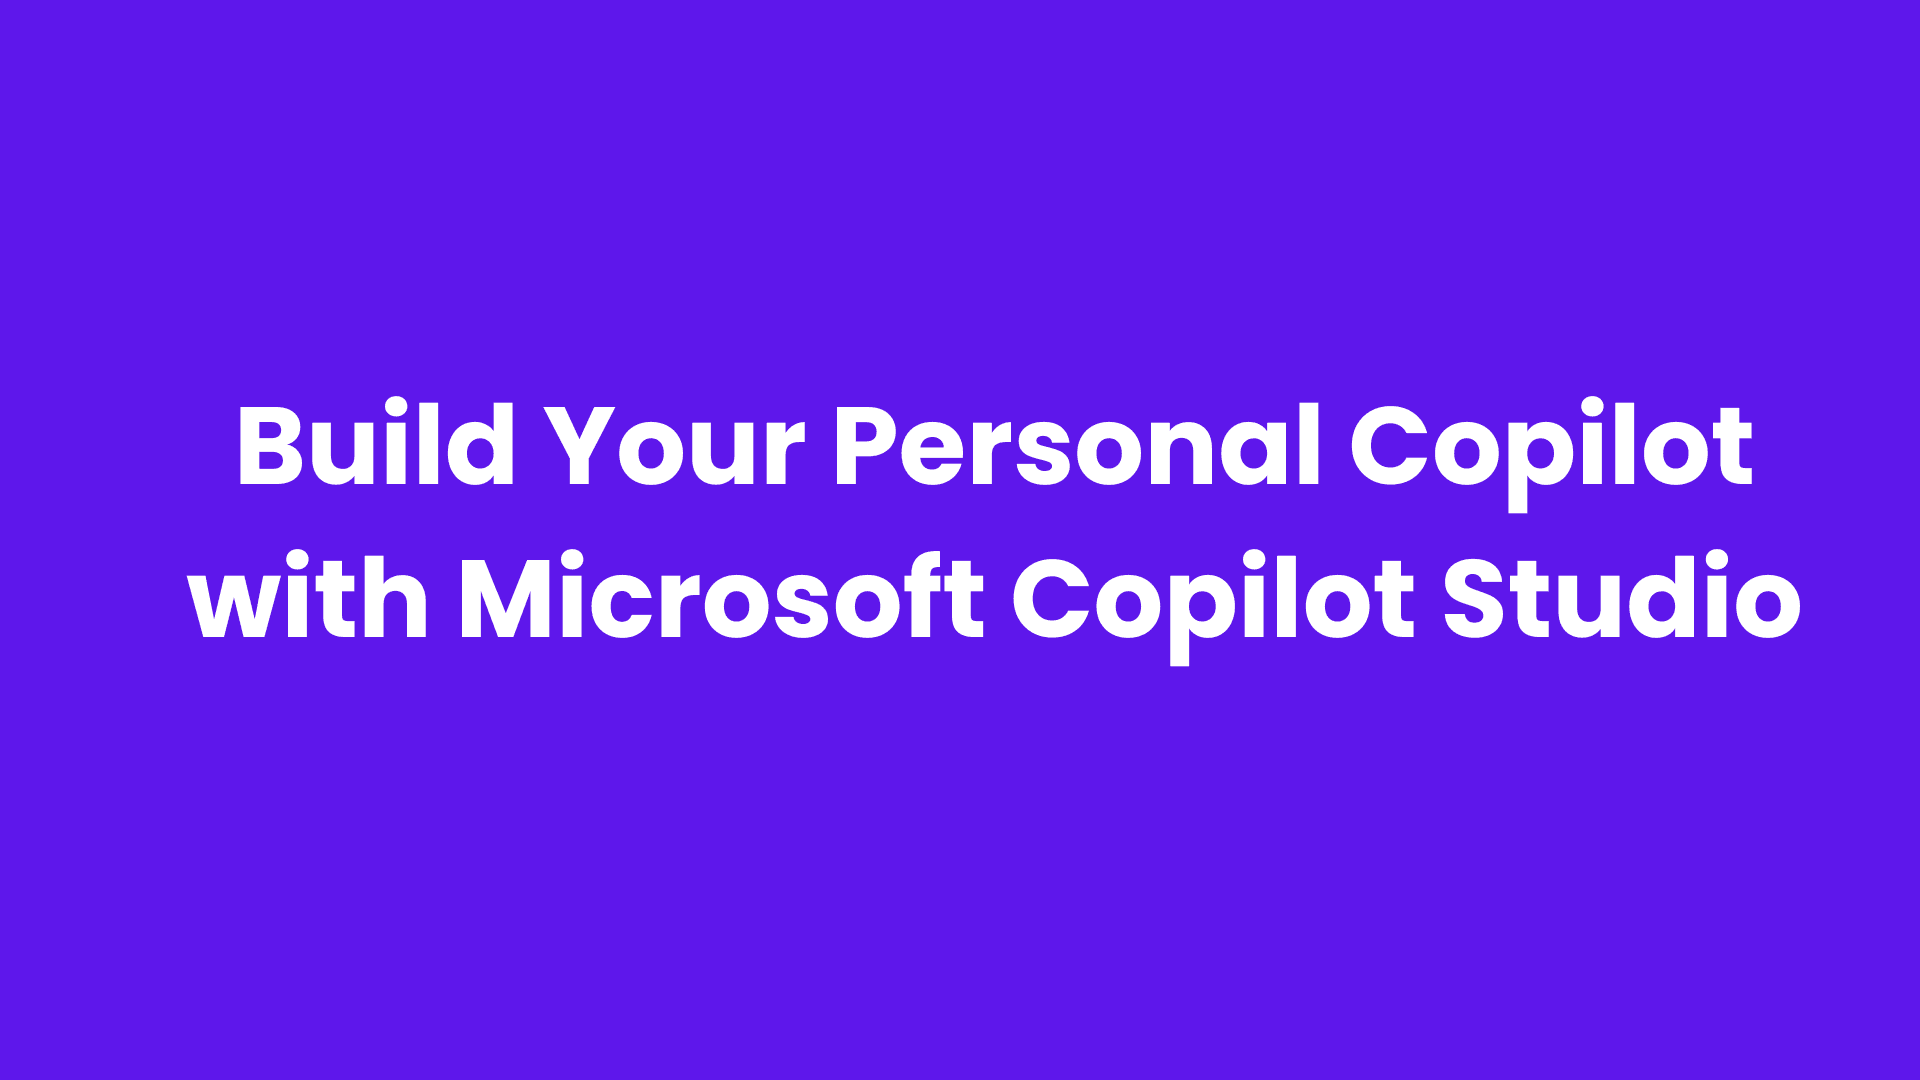 Build Your Personal Copilot with Microsoft Copilot Studio